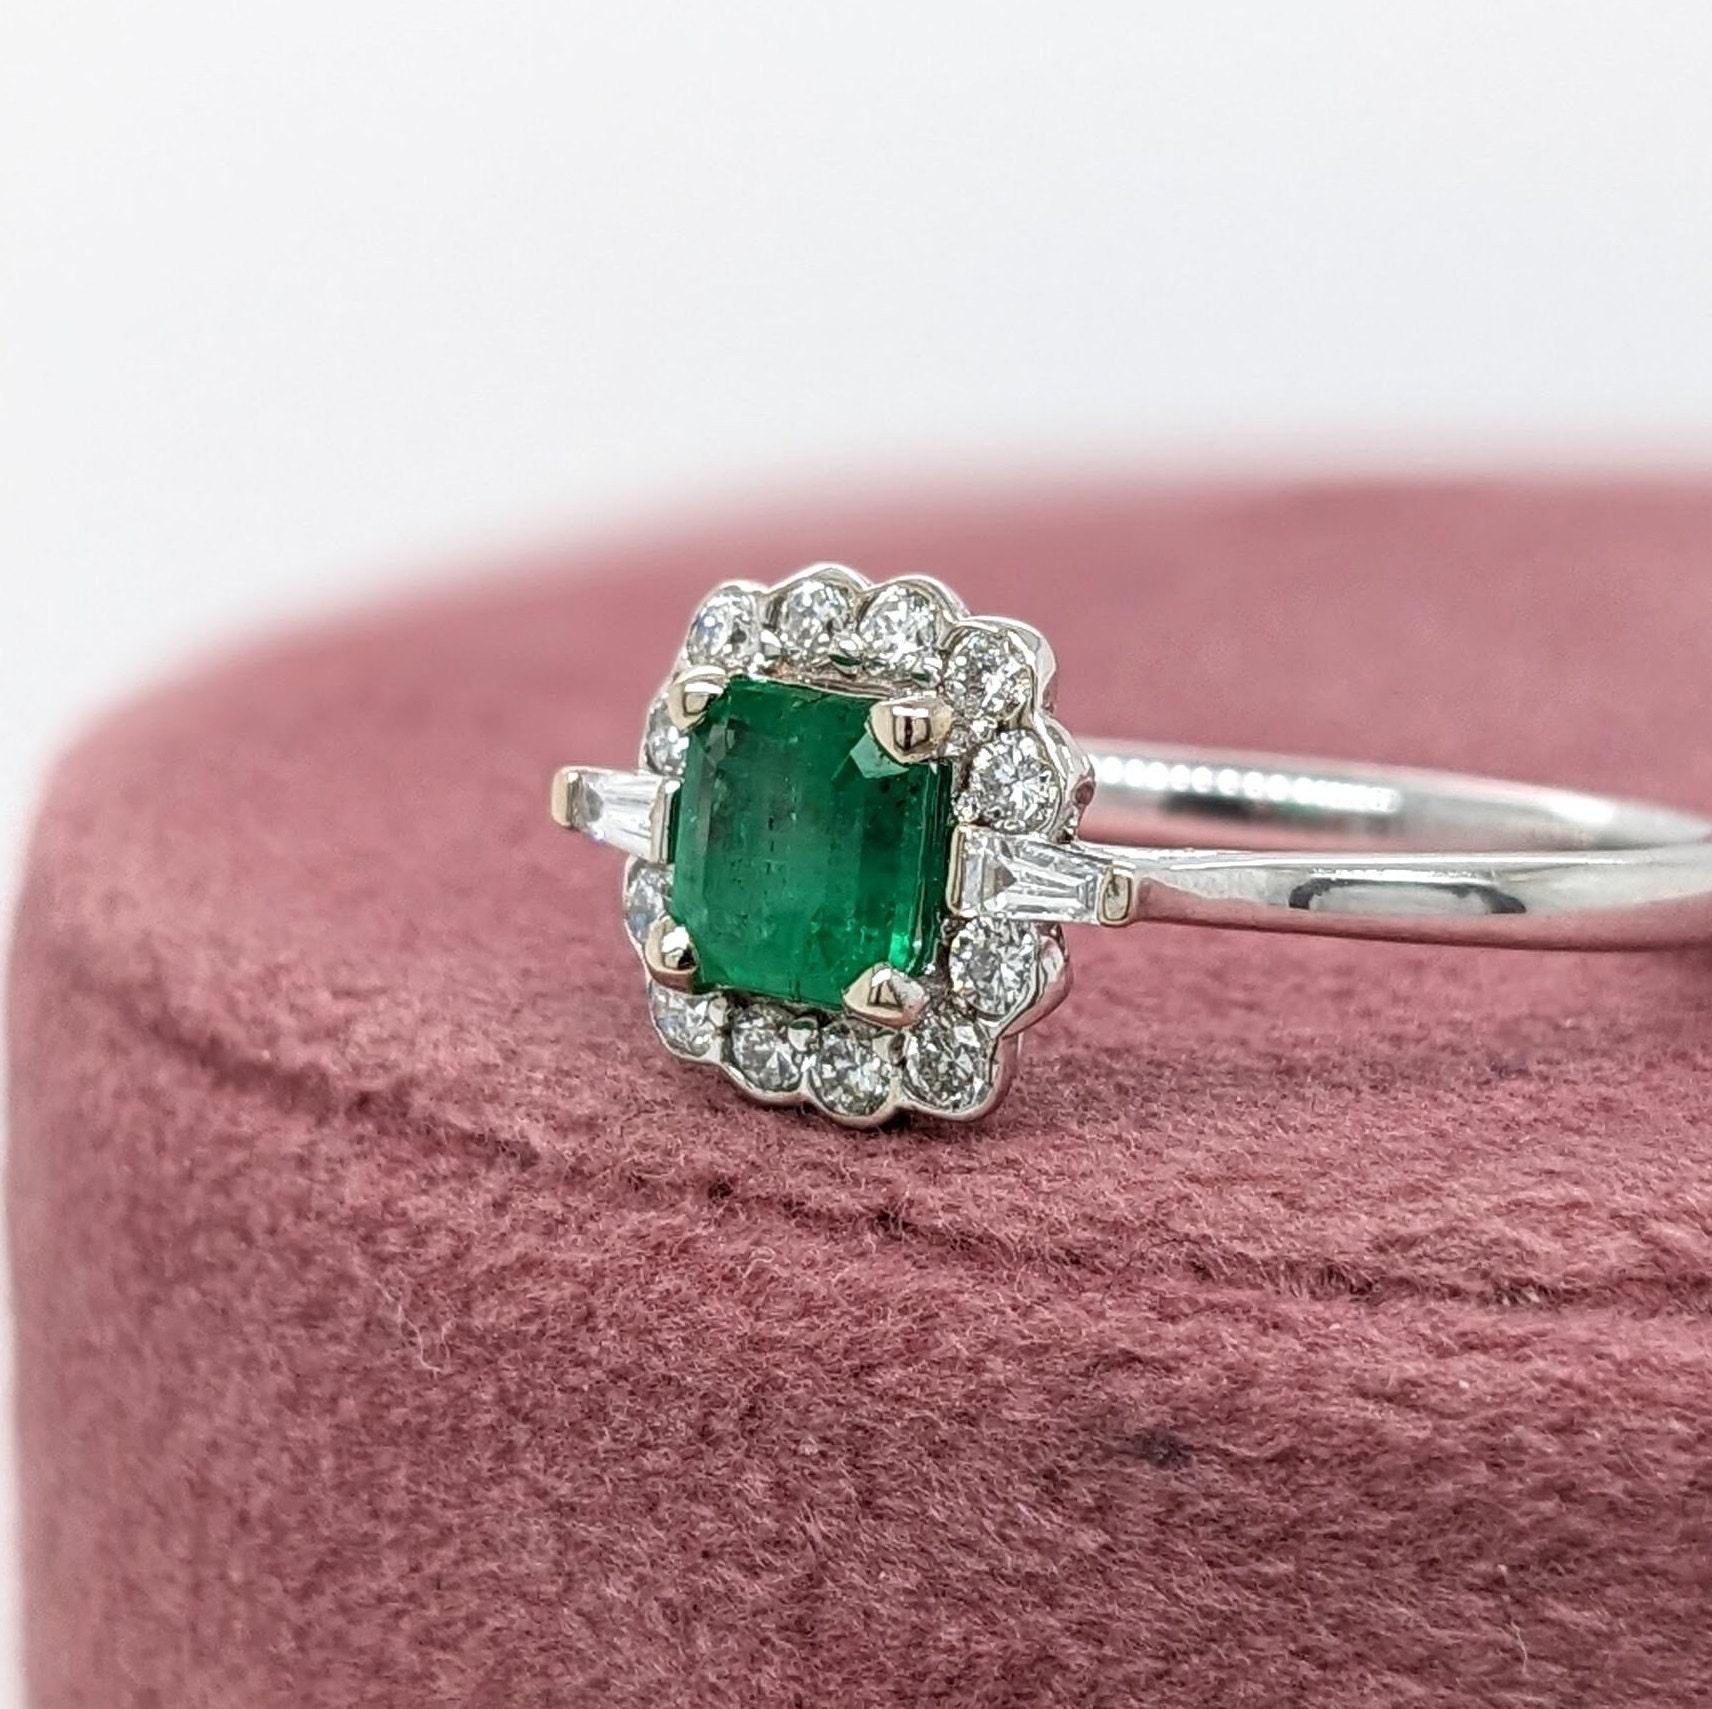 Modern Zambian Emerald w Earth Mined Diamonds in Solid 14K White Gold EM 5mm For Sale